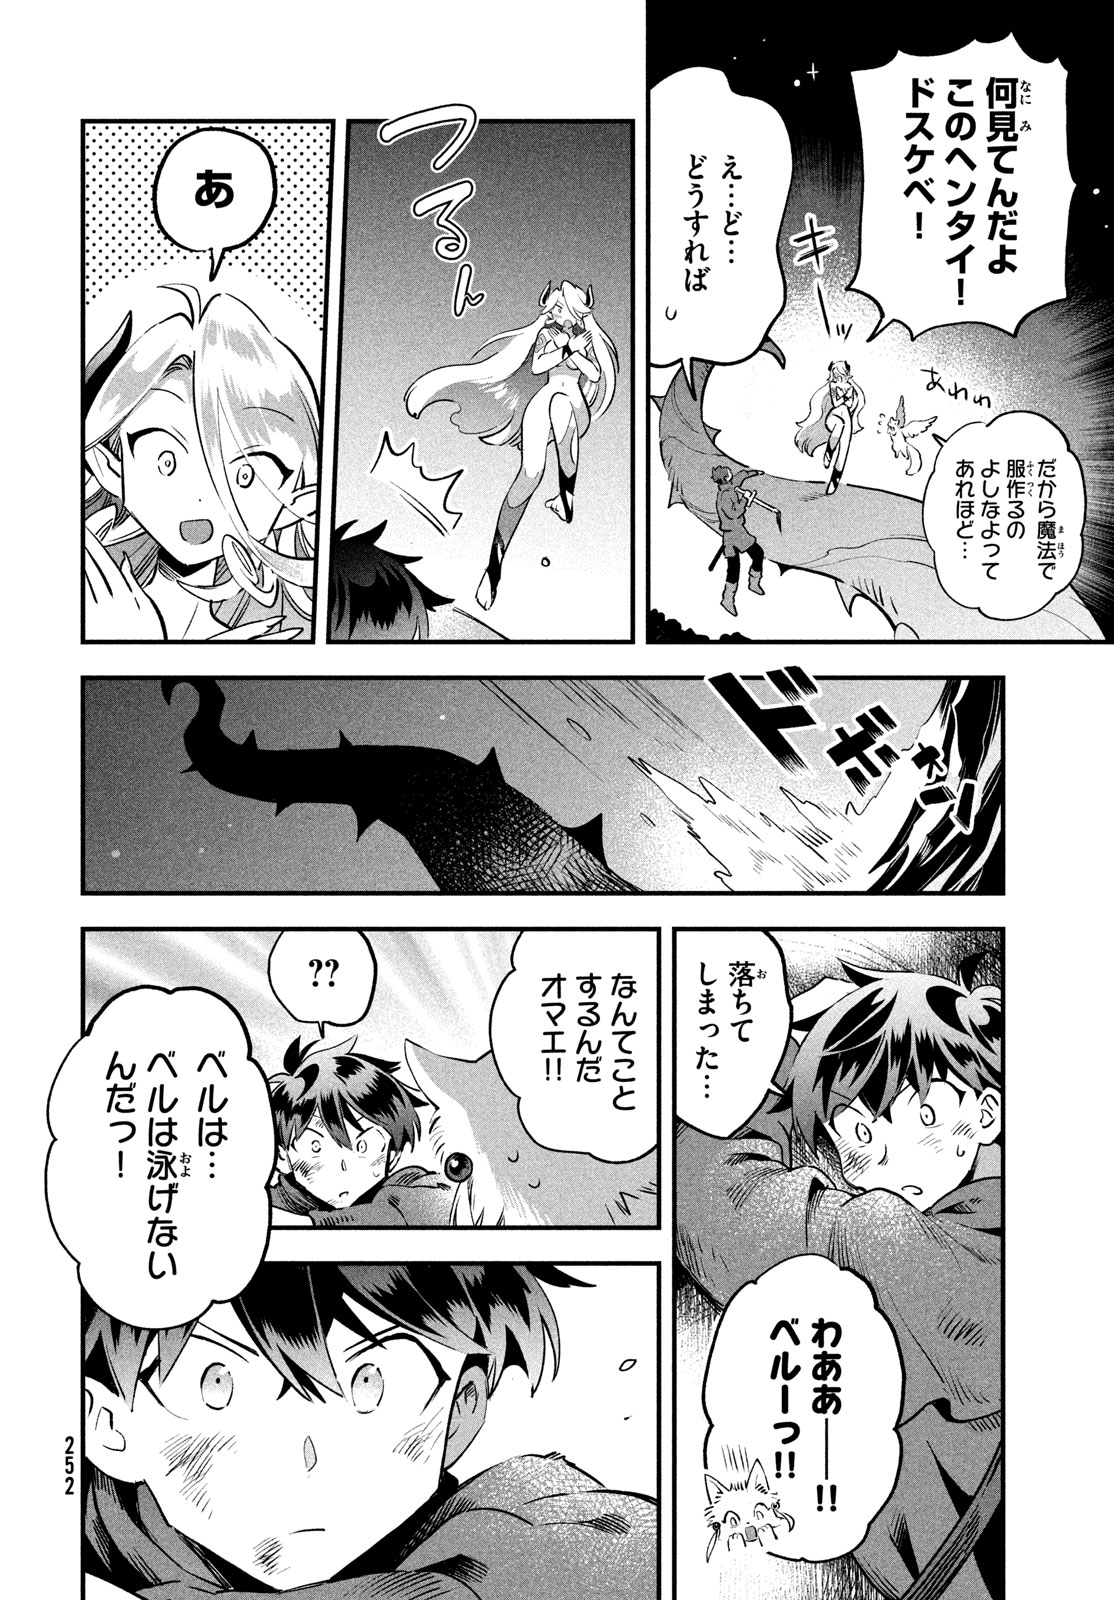 7-nin no Nemuri Hime - Chapter 47 - Page 12